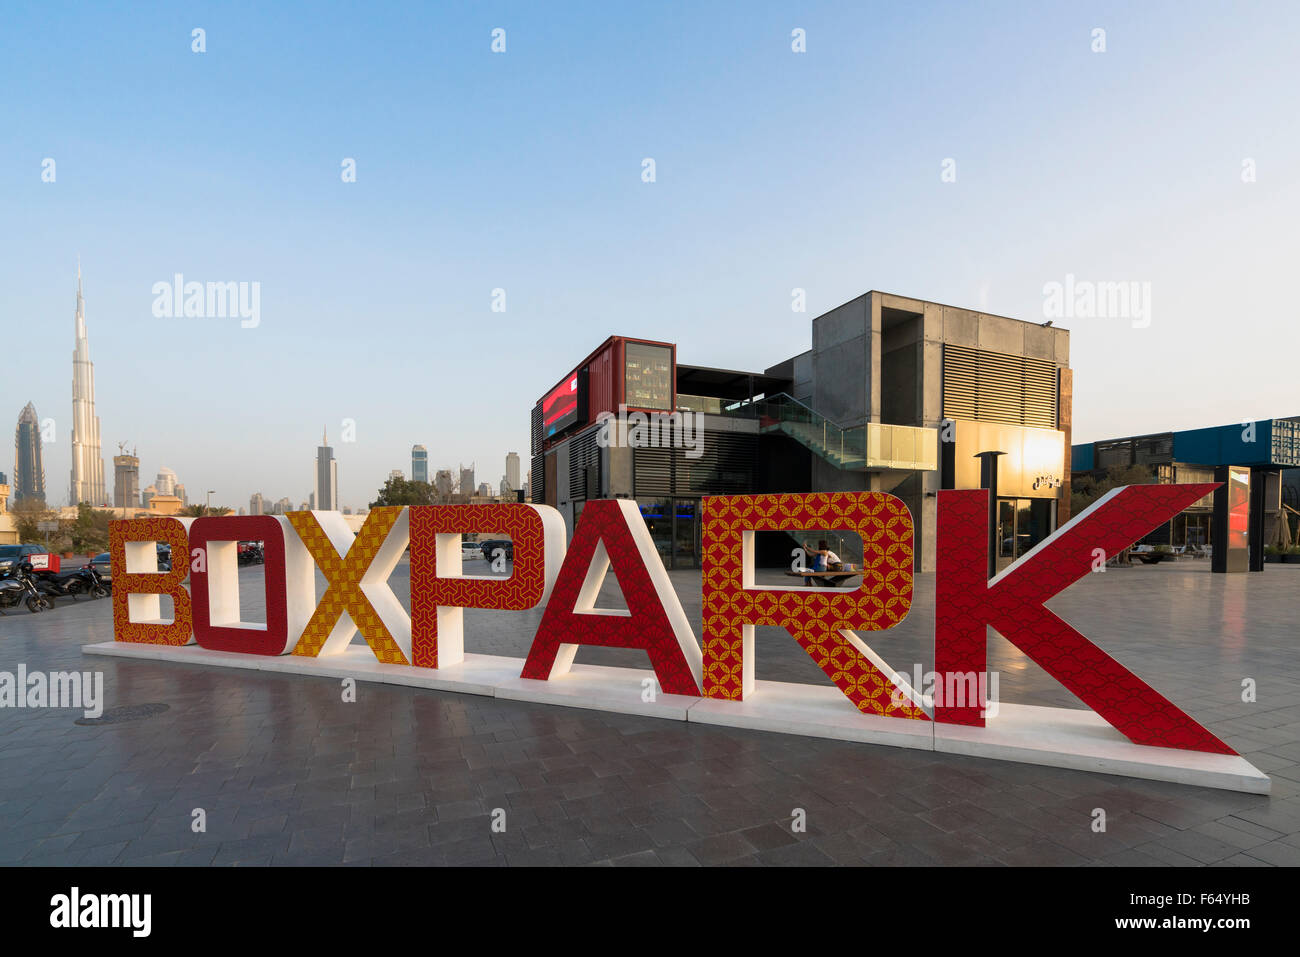 New Boxpark retail development containing shops, cafes and restaurants  in Dubai United Arab Emirates Stock Photo